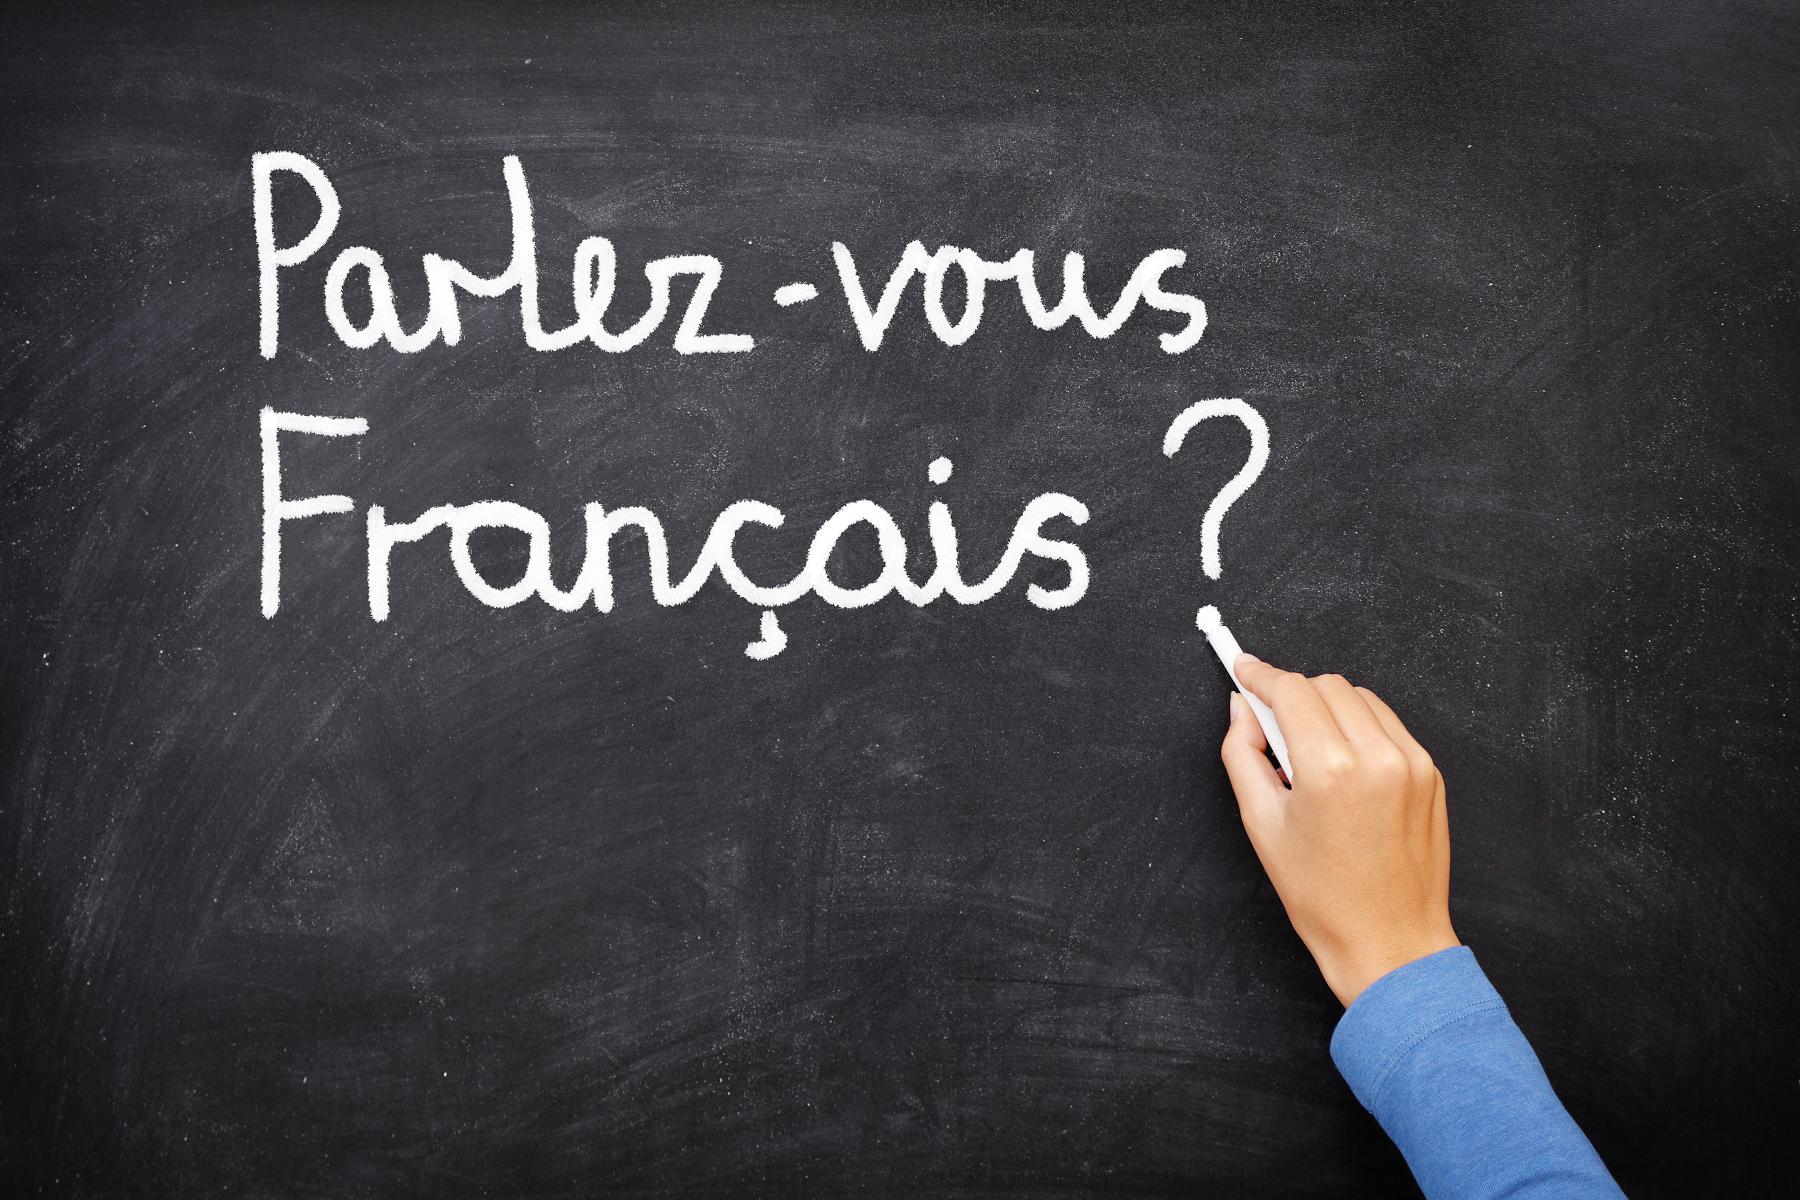 chalkboard with words "parlez-vous francais?"